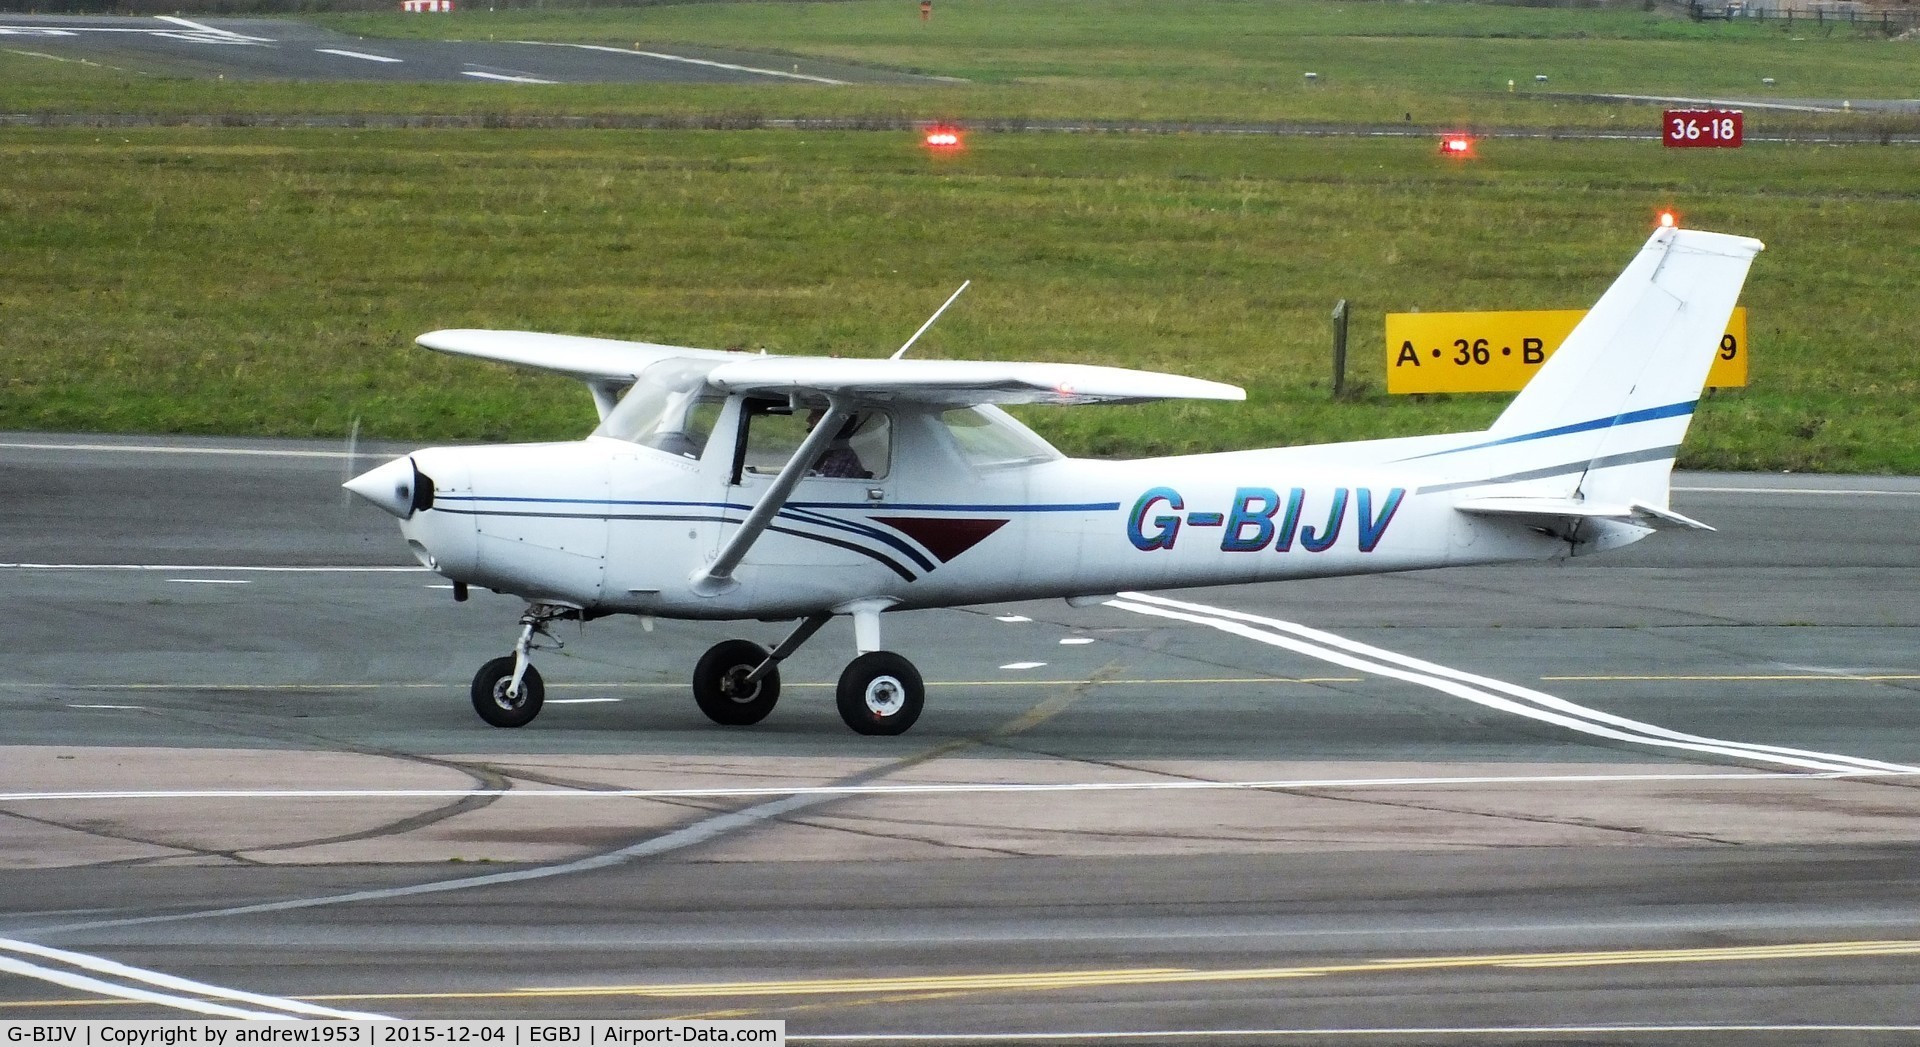 G-BIJV, 1981 Reims F152 C/N 1813, G-BIJV at Gloucestershire Airport.